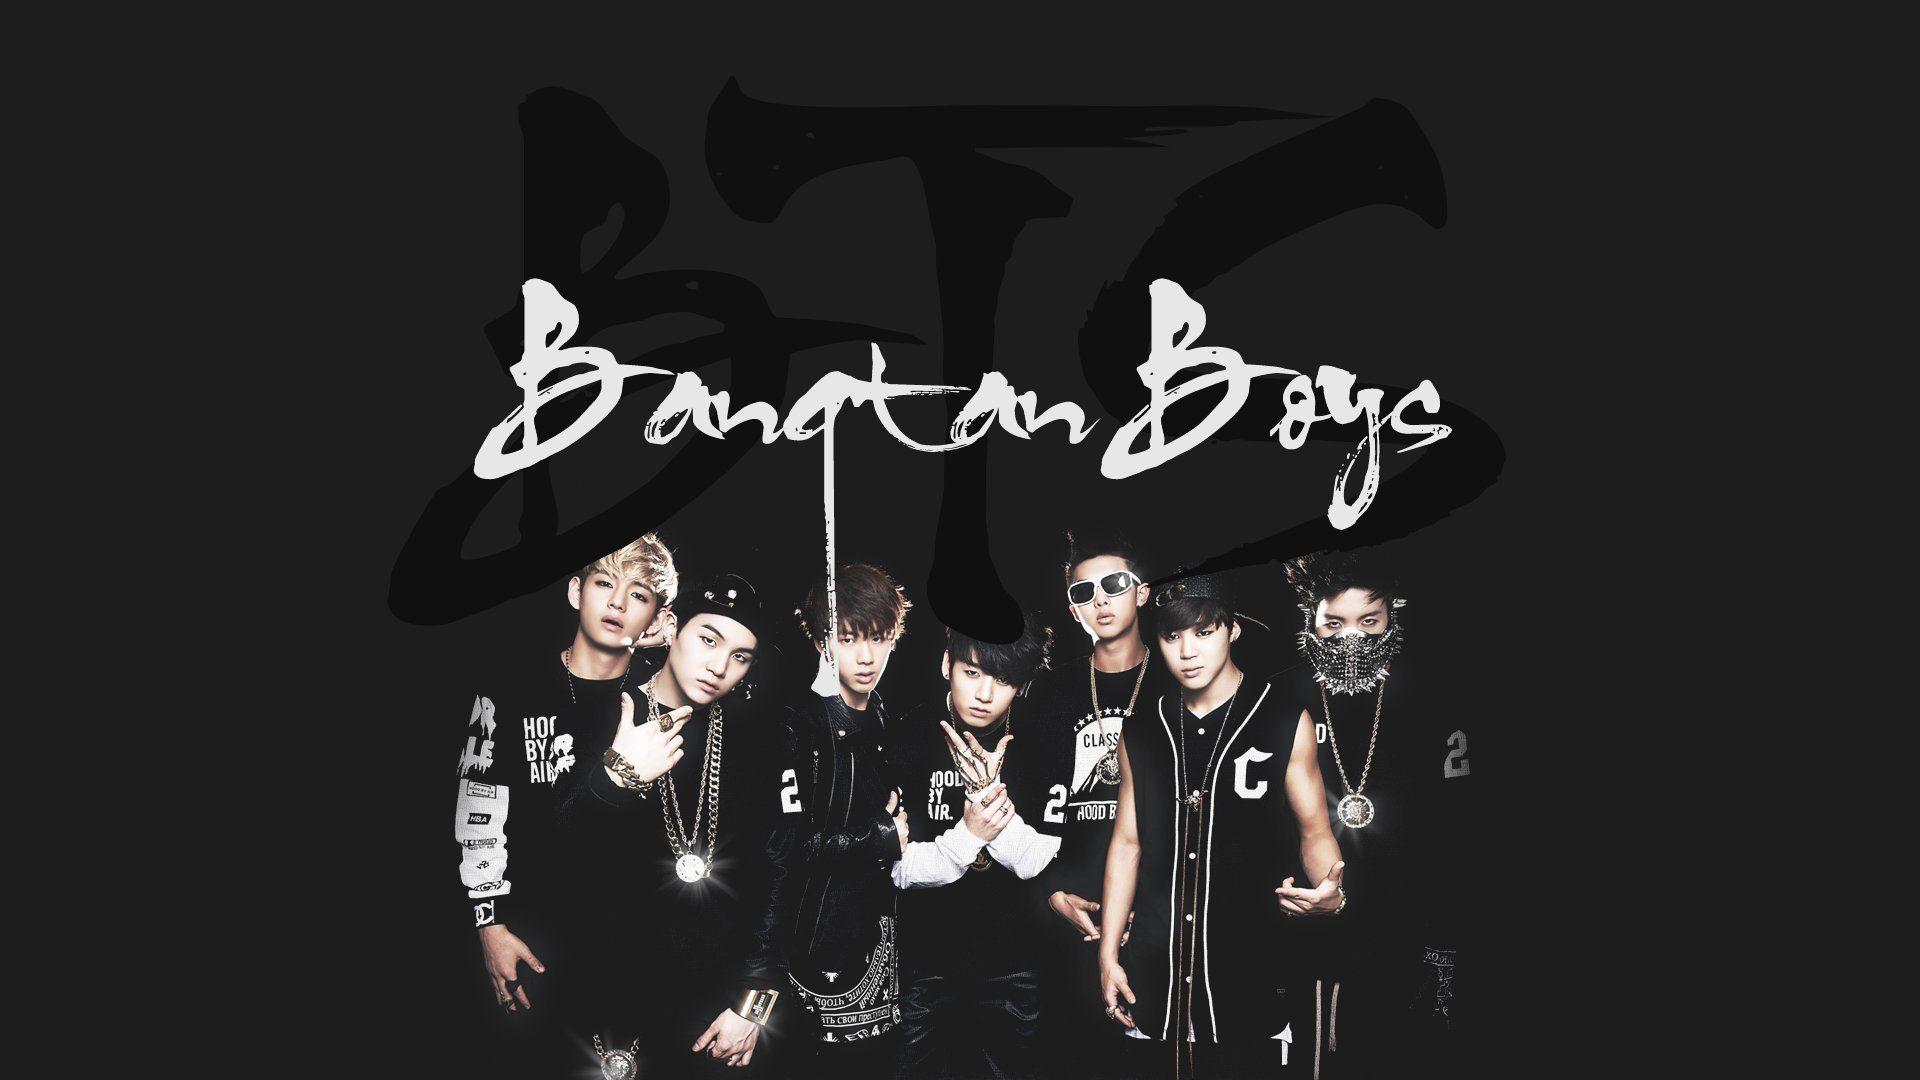 BTS image Bangtan Boys (BTS) HD wallpaper and background photo